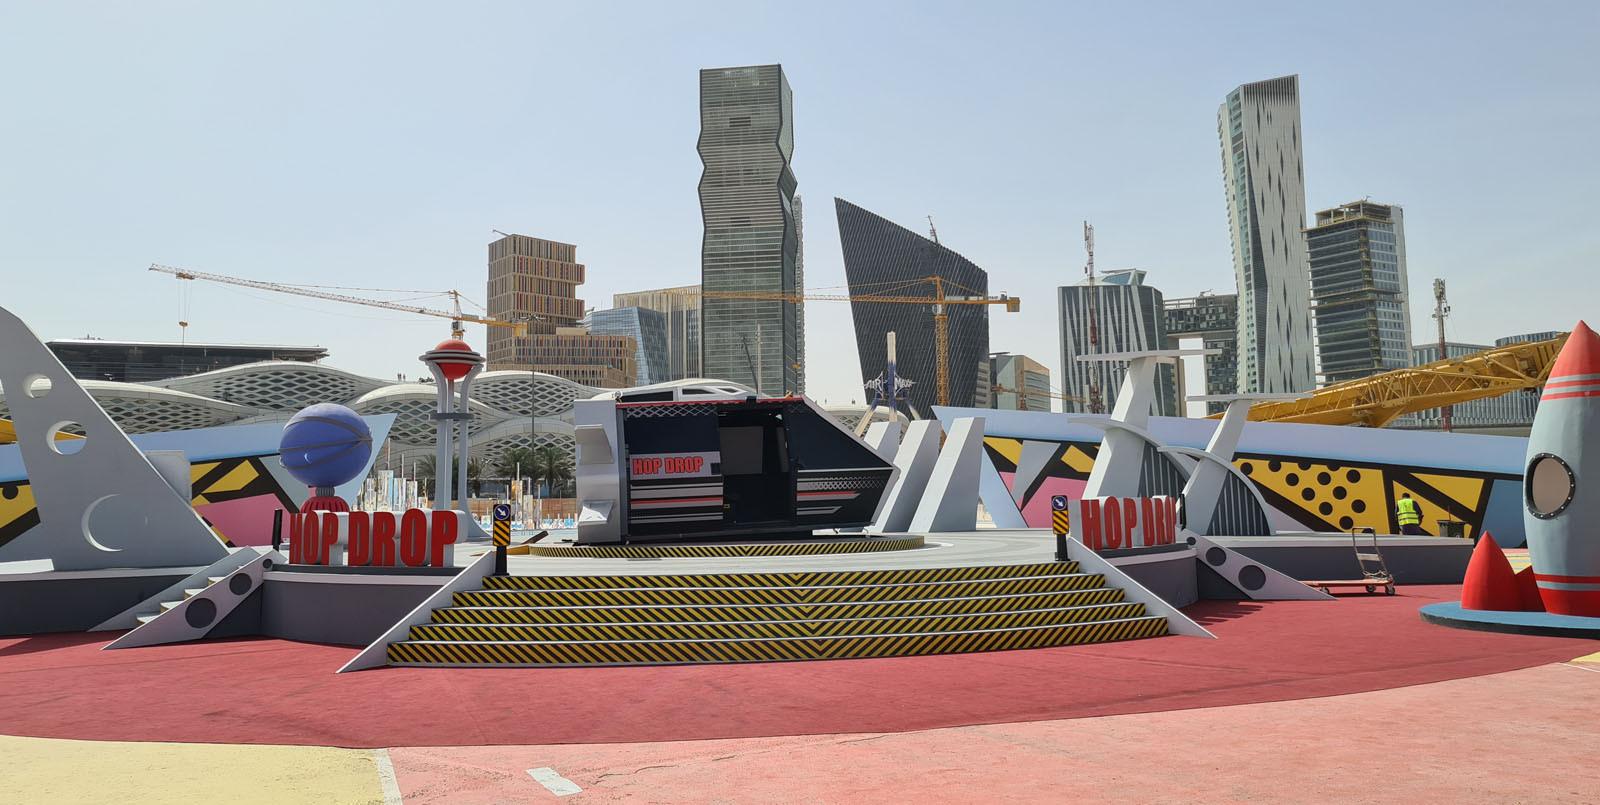 on set of Ramez, a rocket shaped capsule placed amongst a pop art futuristic set